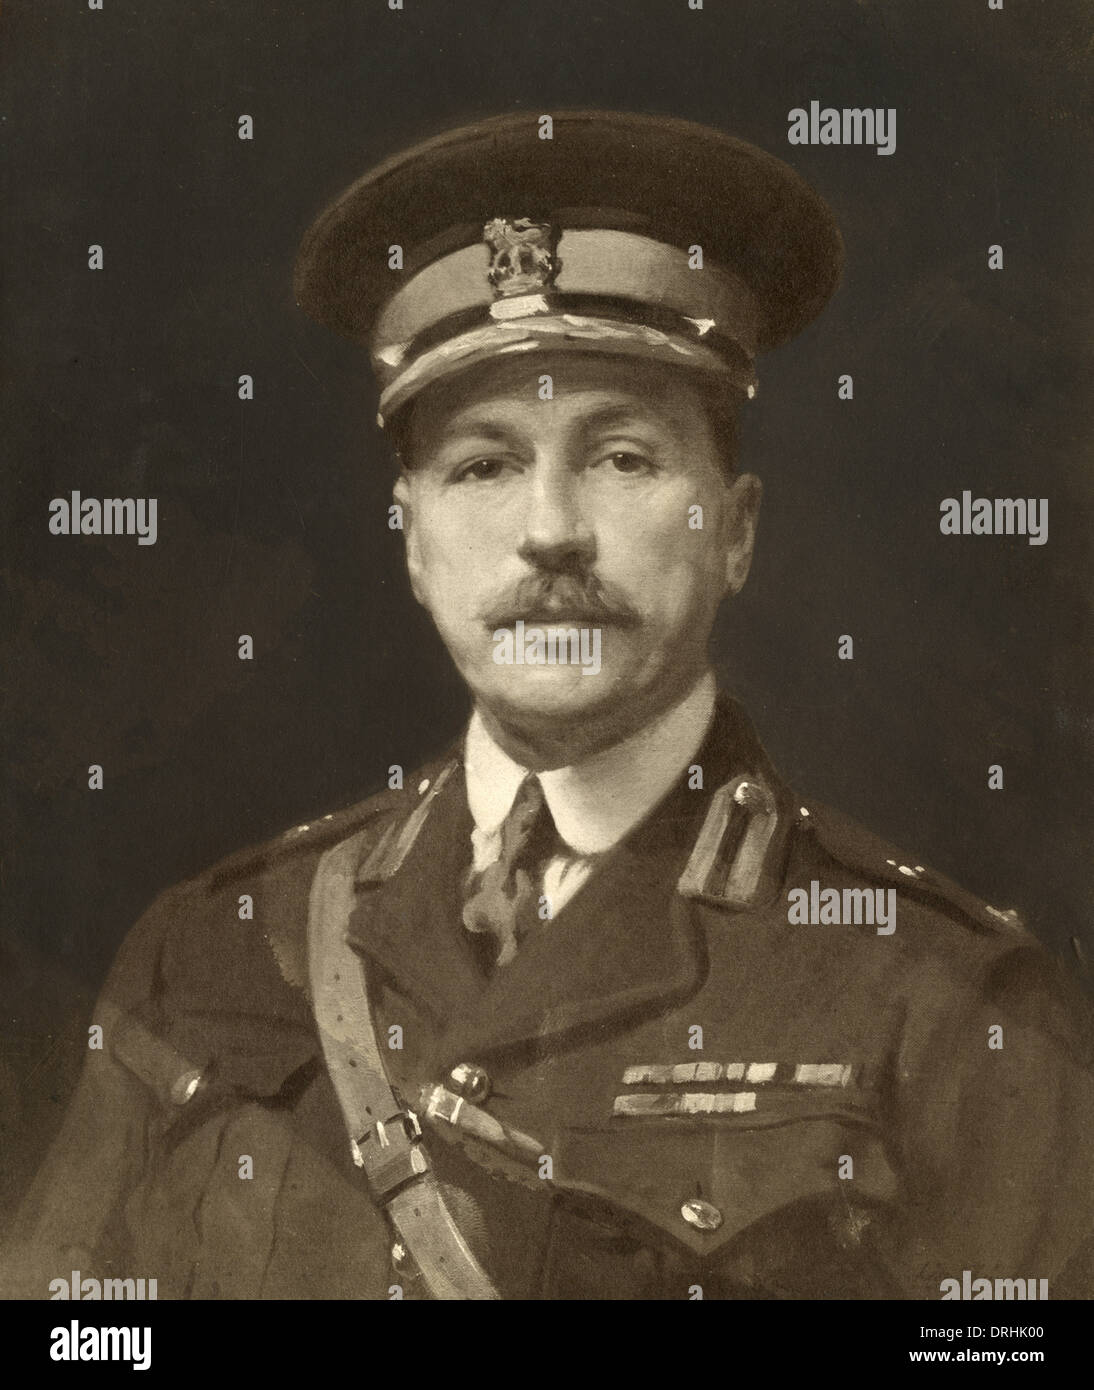 Brigadier General Malcolm Peake, British army officer, WW1 Stock Photo